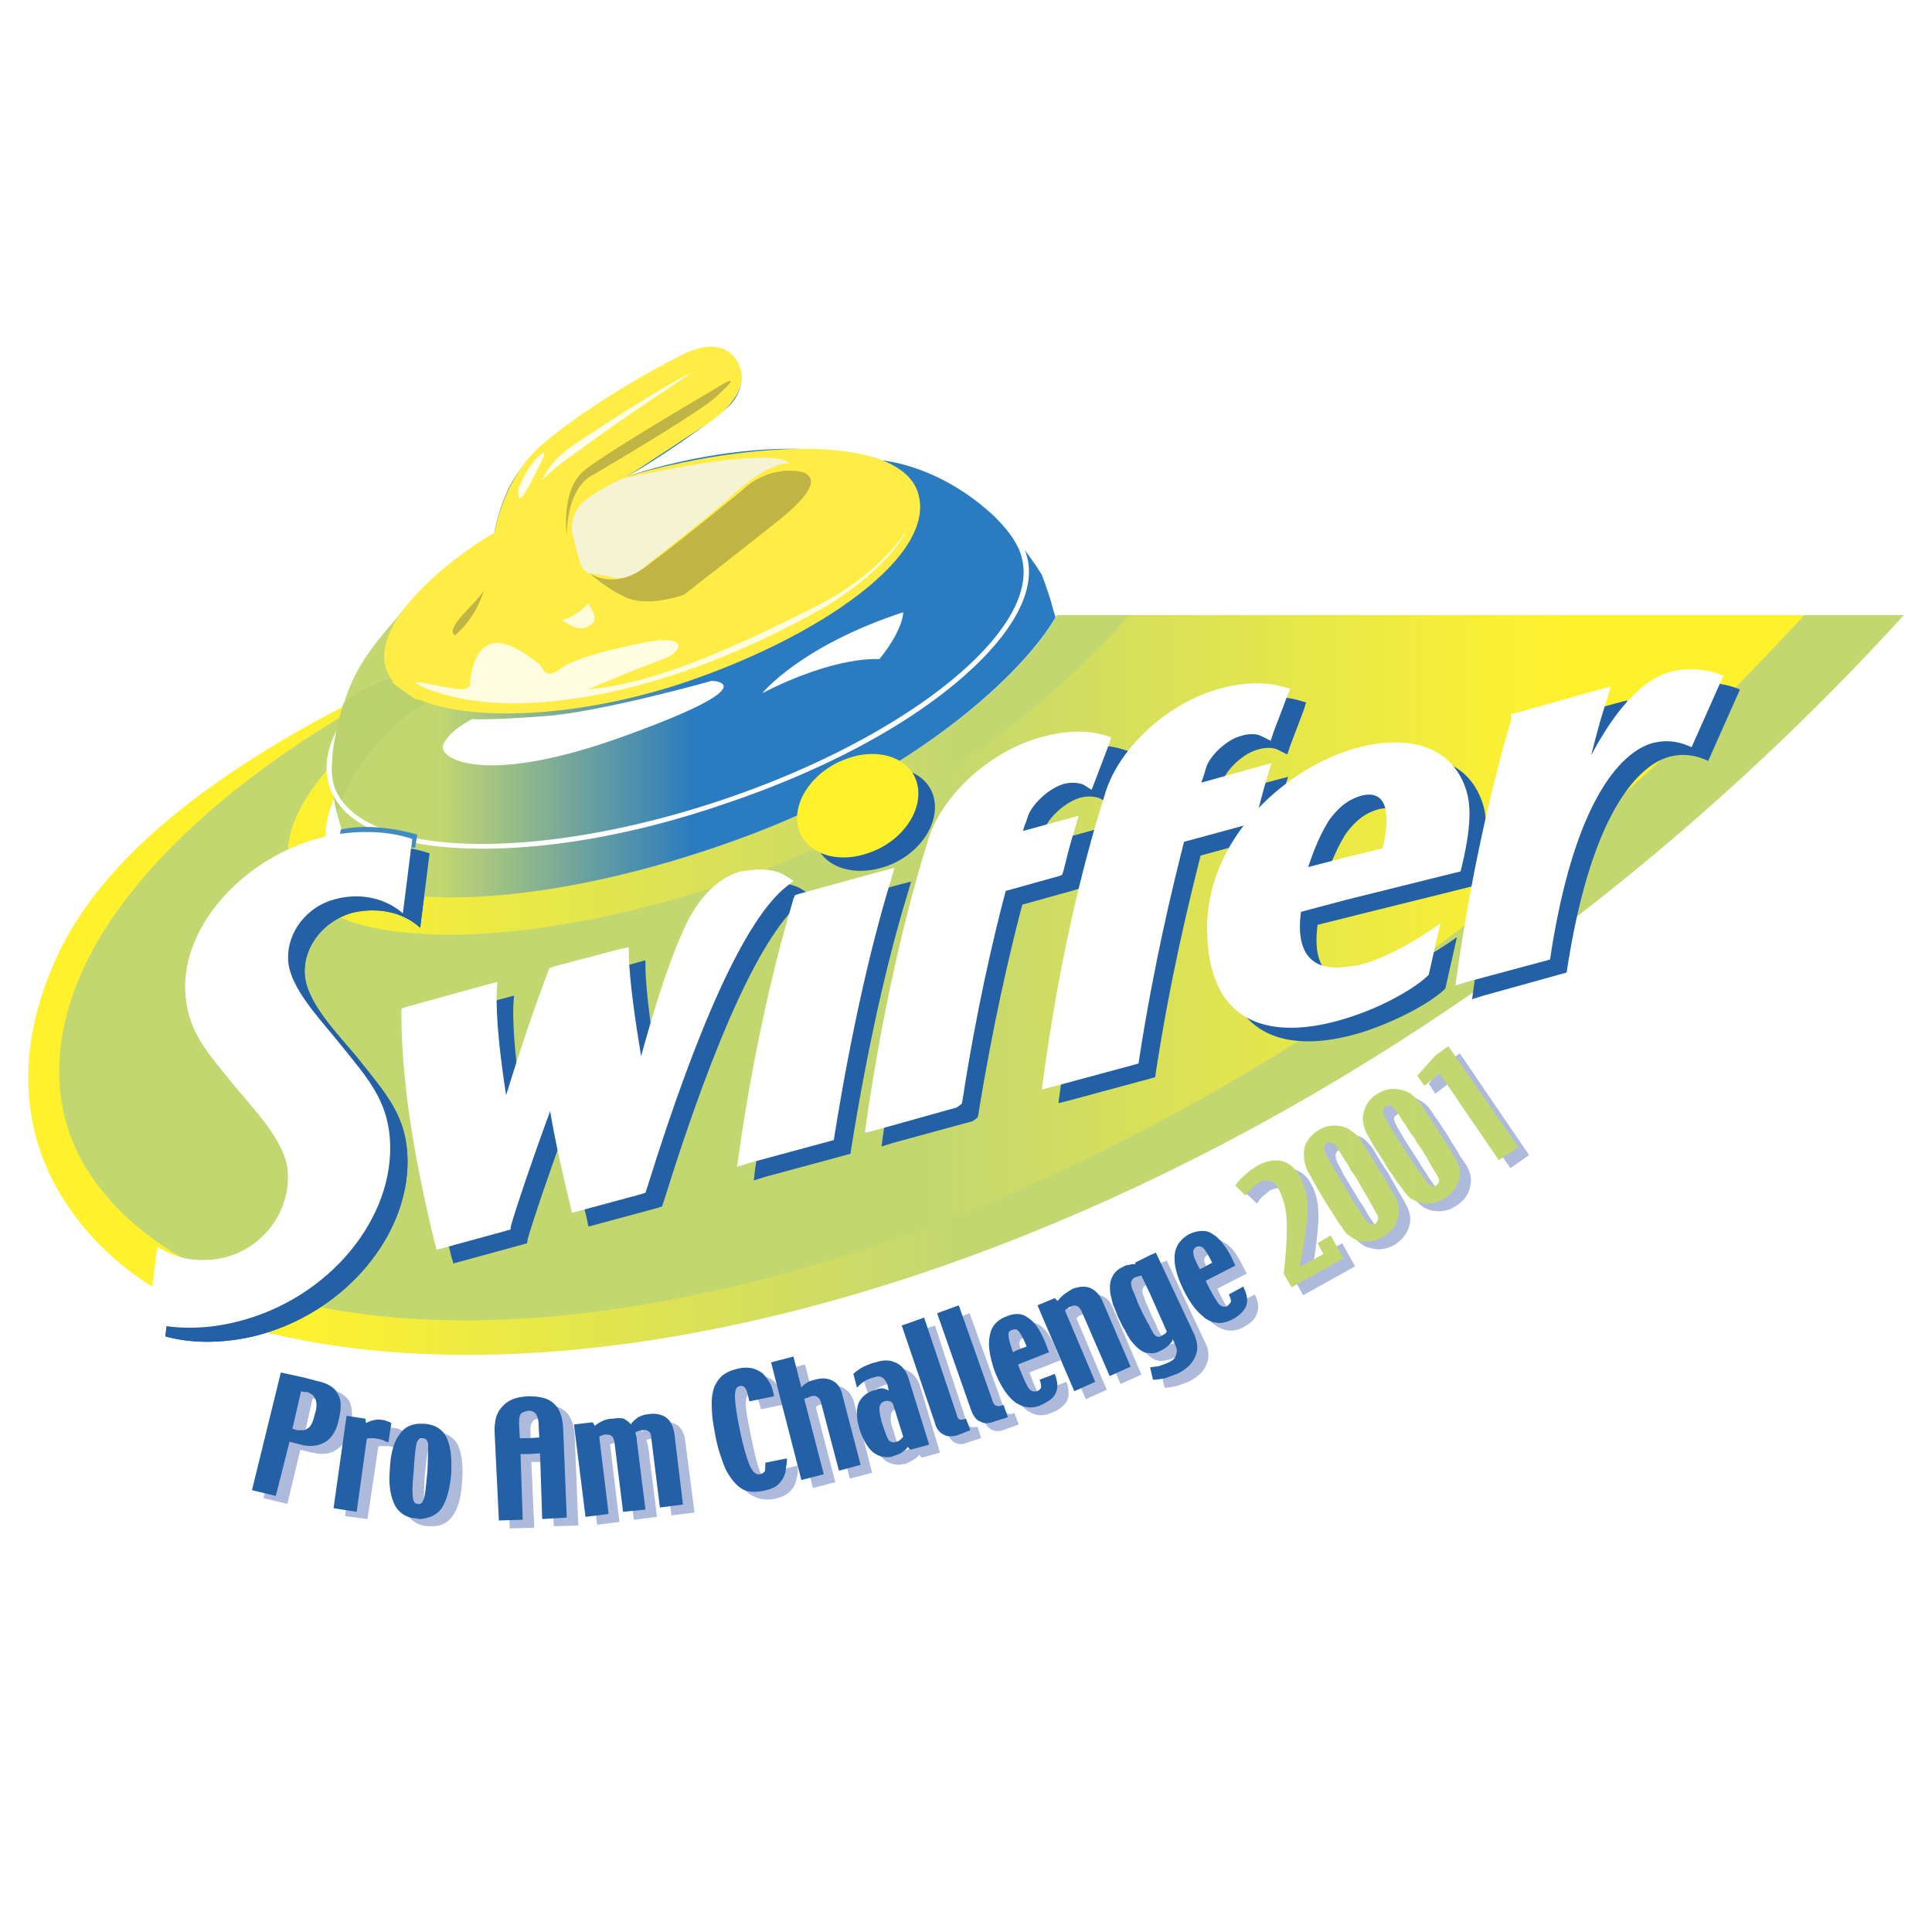 Swiffer logo colors